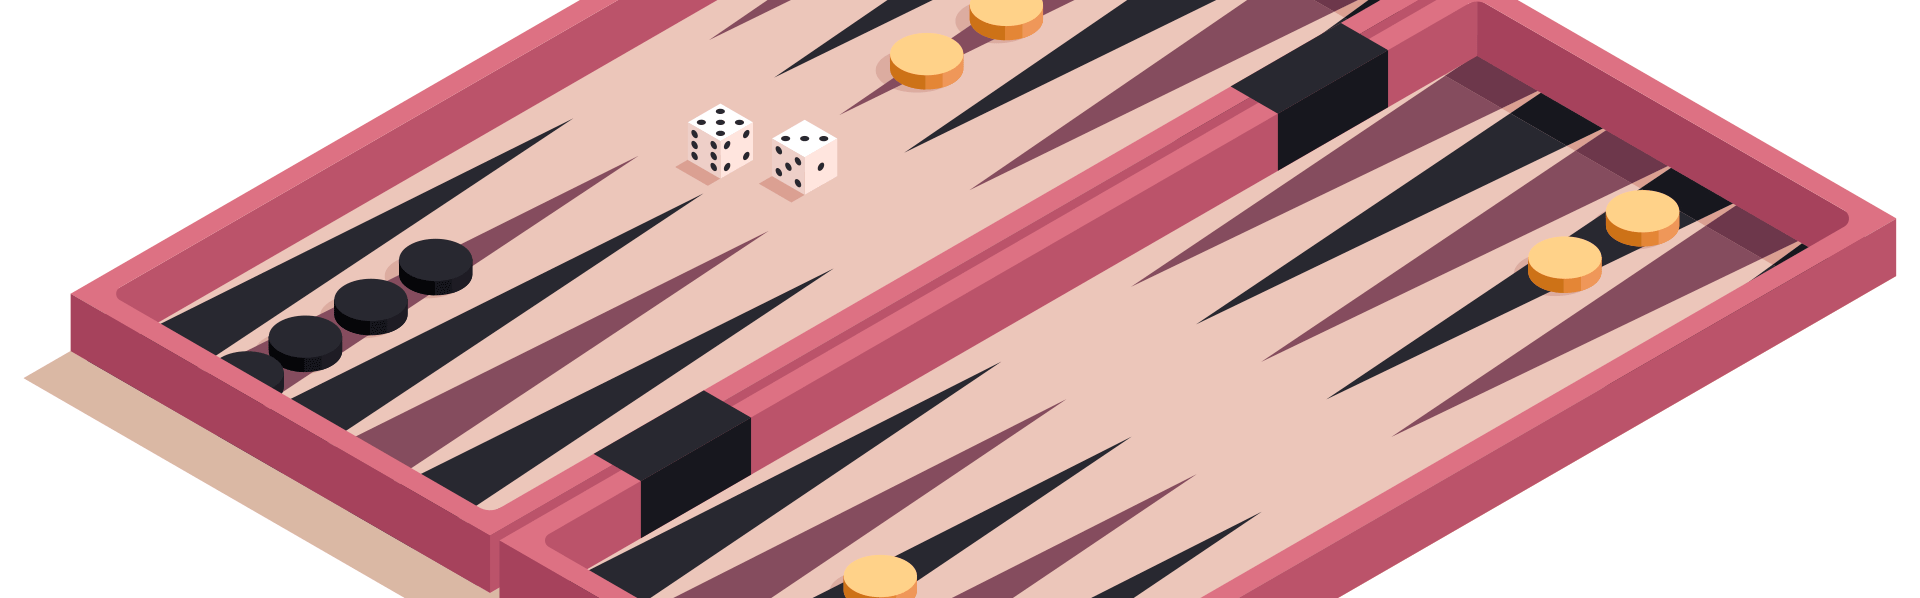 Plateau de jeu du backgammon